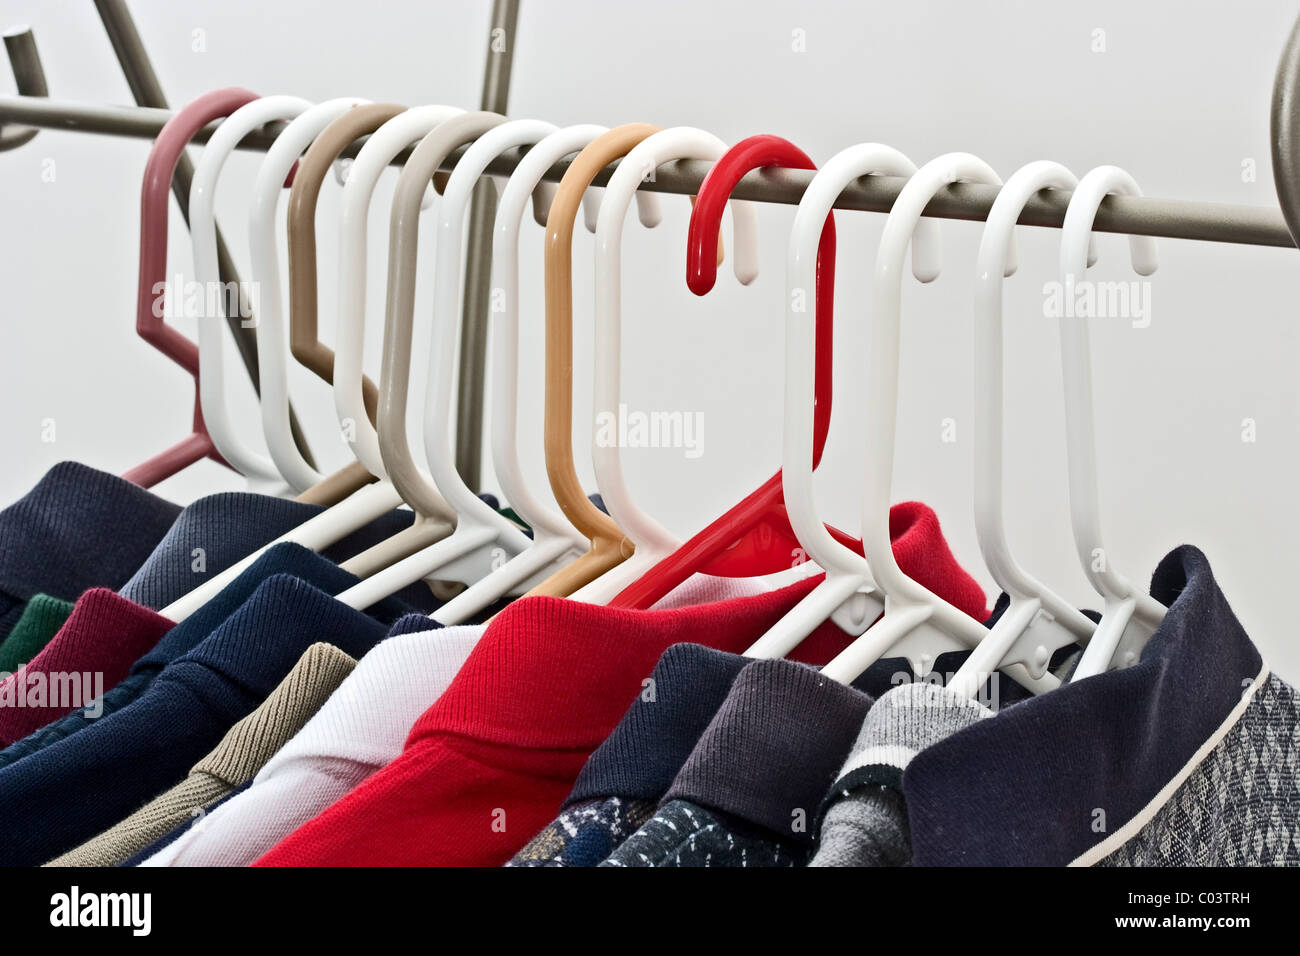 Shirts on hangers on a metal rack. Stock Photo